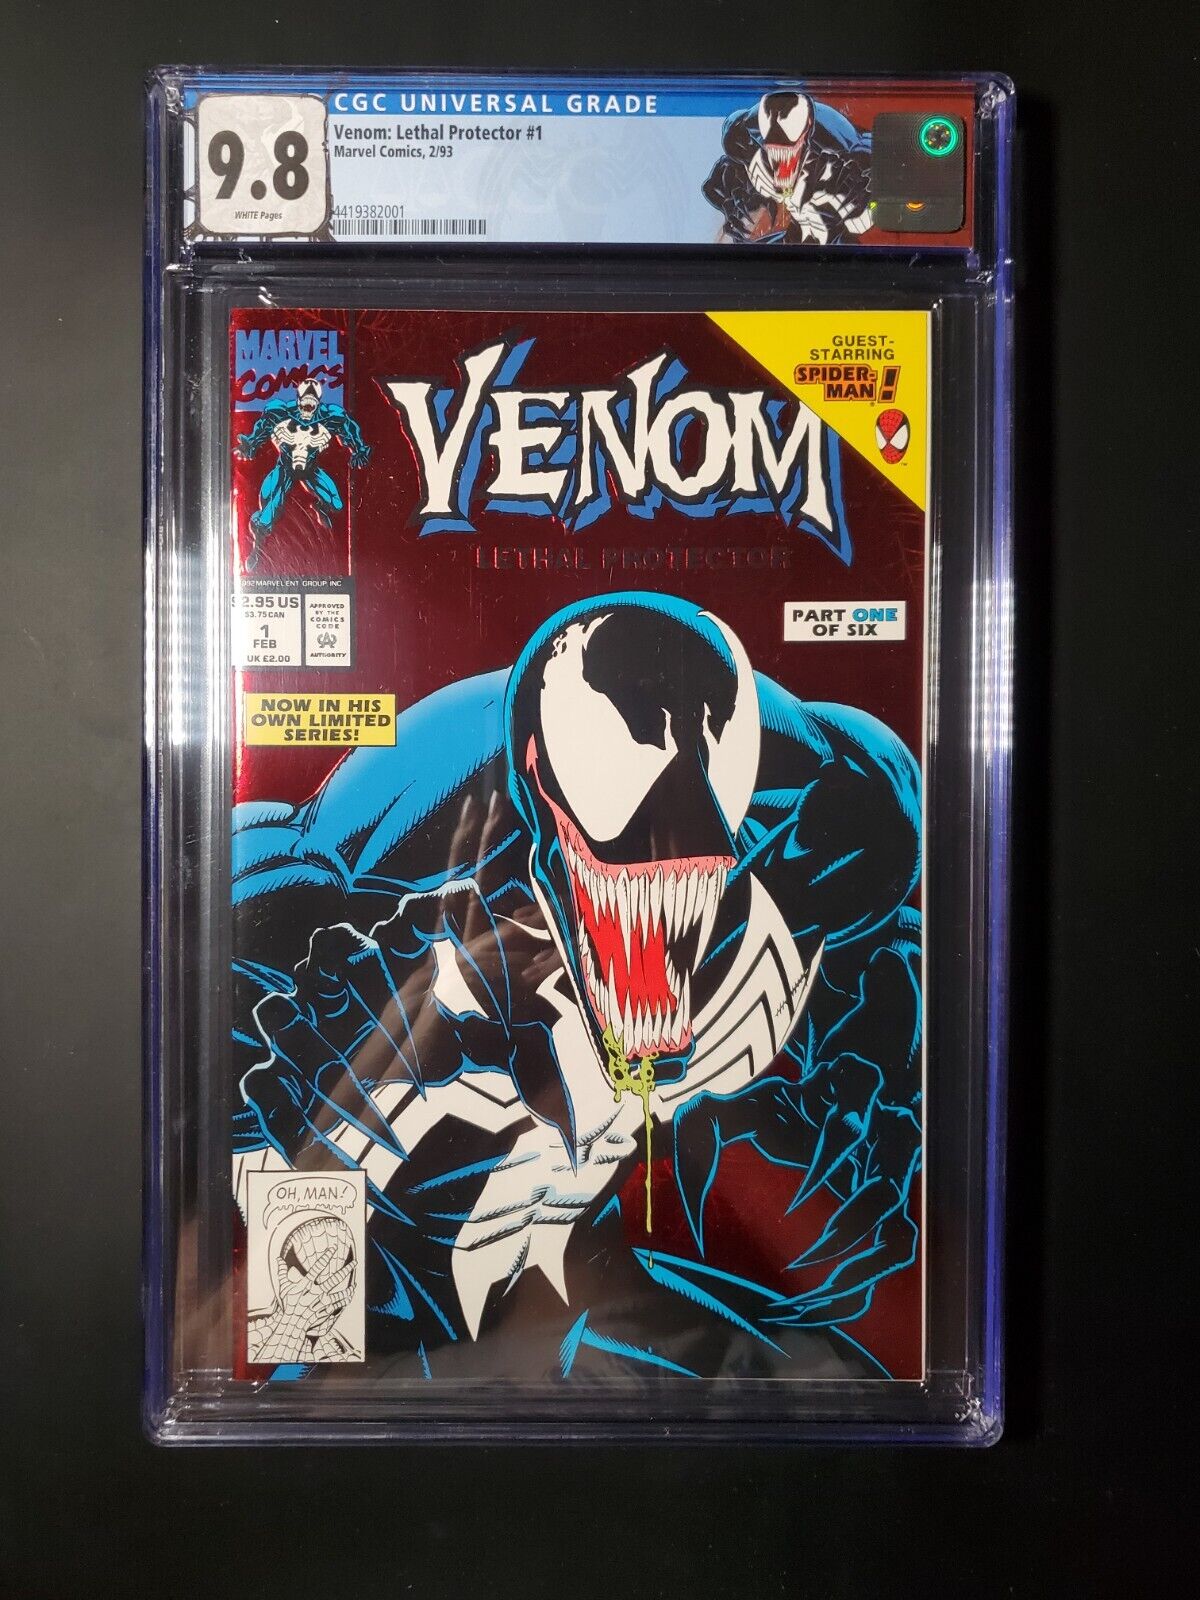 Venom: Lethal Protector #1 Marvel Comics 1993 CGC 9.8 Custom Label